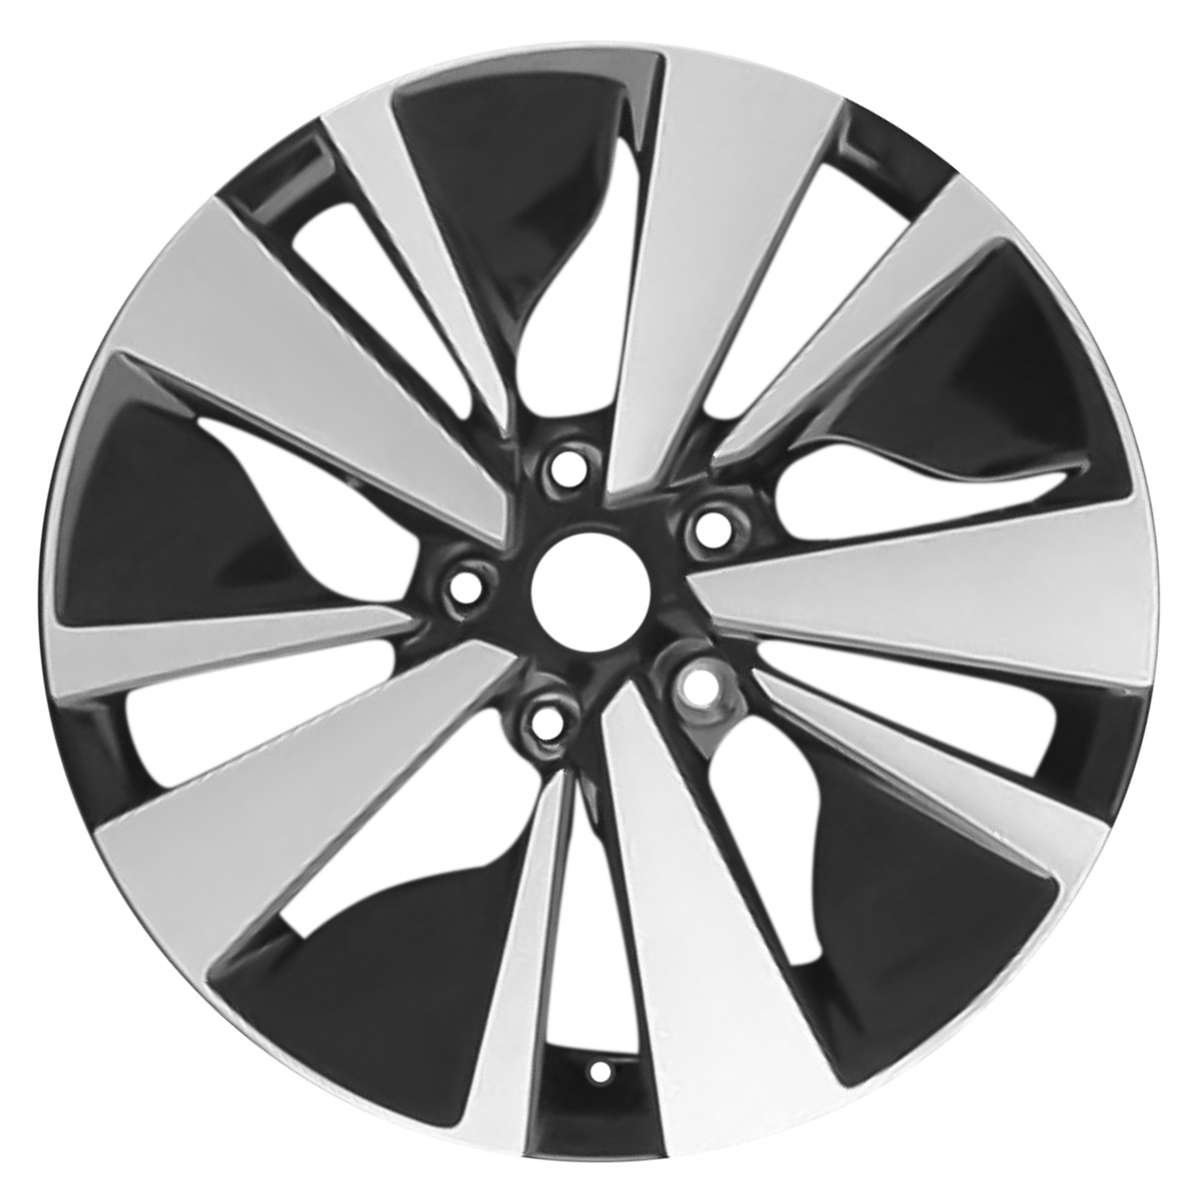 2019 Nissan Altima New 17" Replacement Wheel Rim RW62784MB